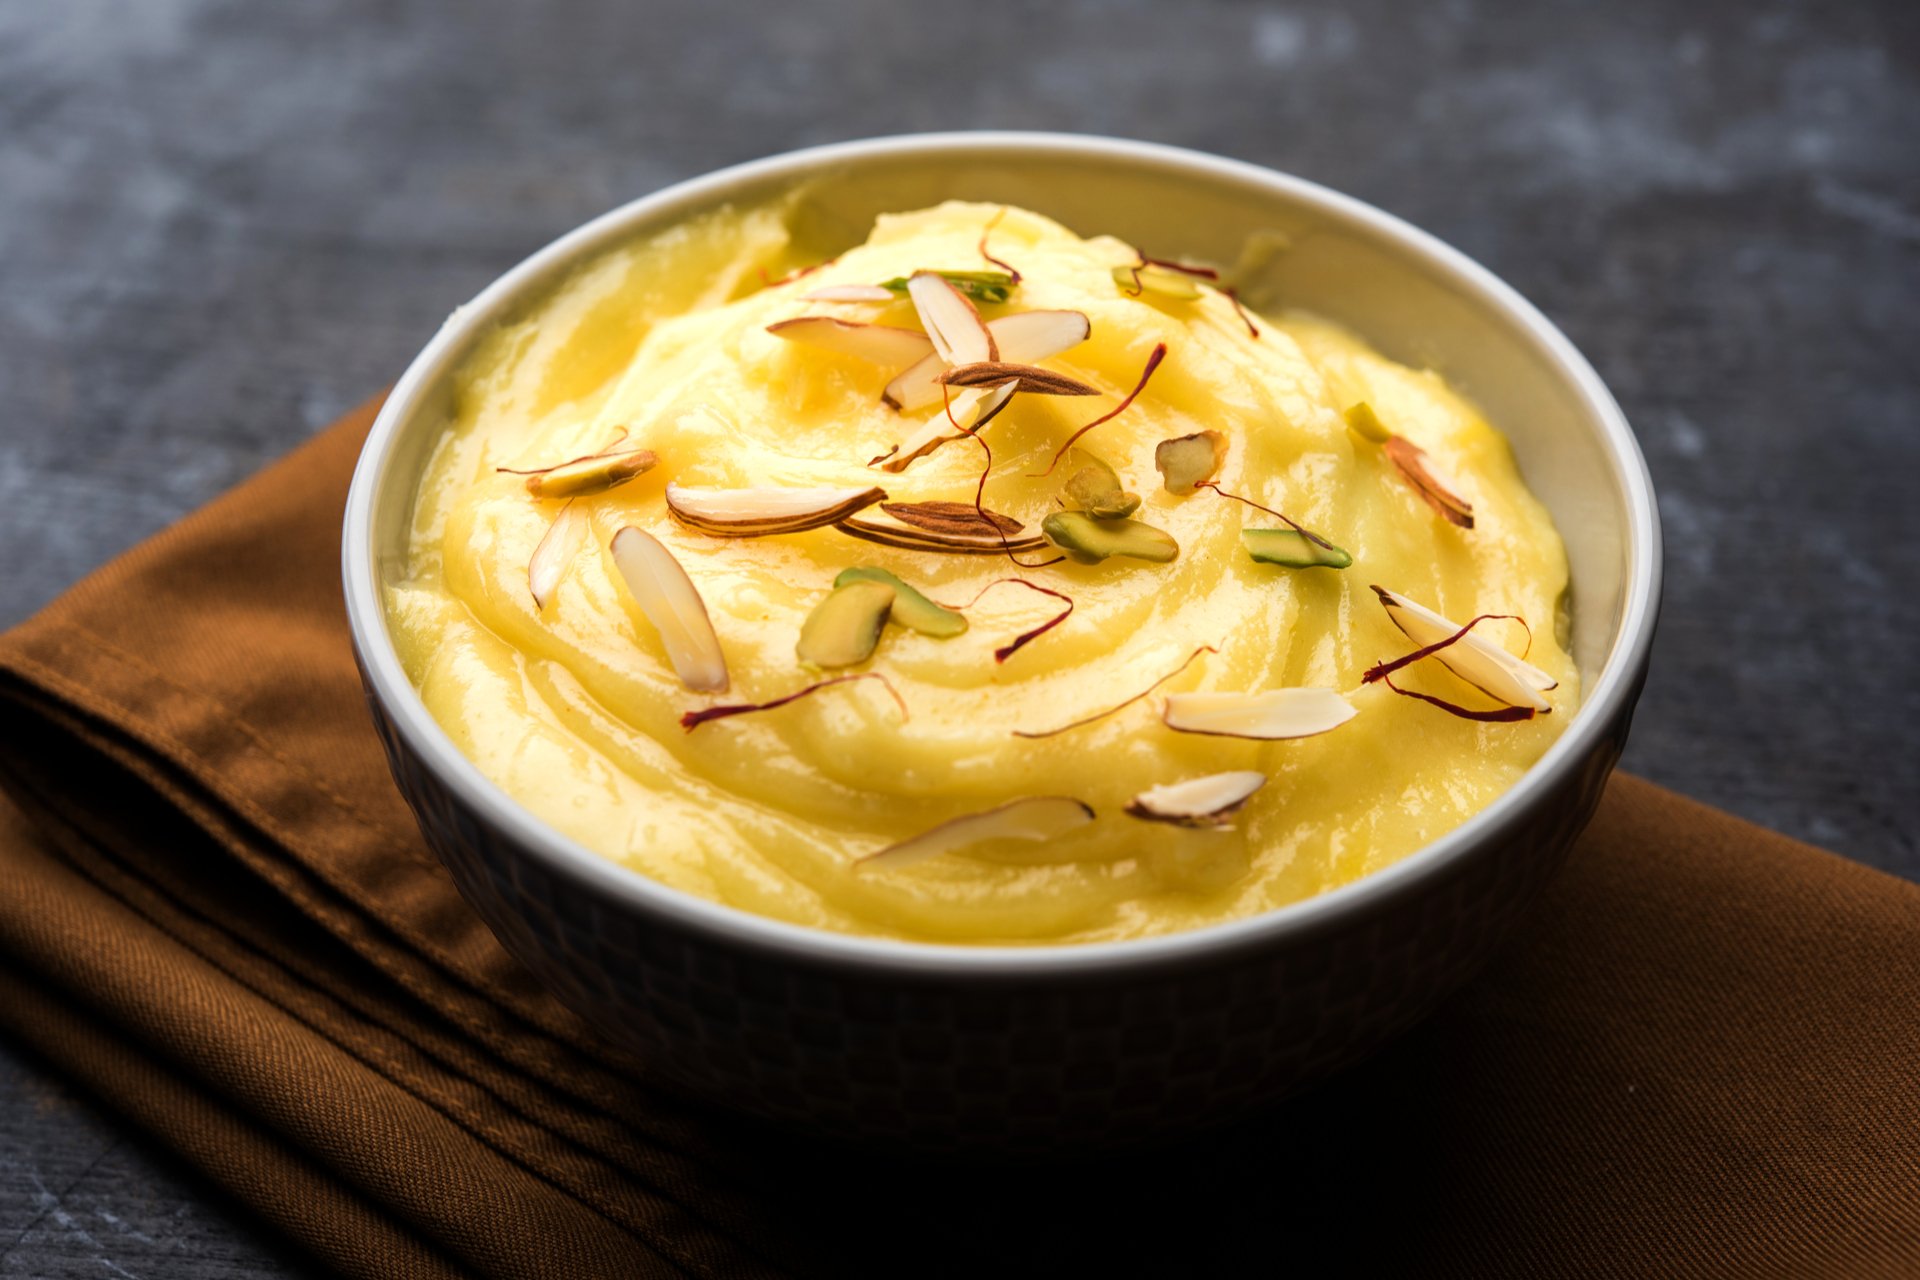 Shrikhand&nbsp;is an Indian dessert&nbsp;prepared with home-made yoghurt cheese